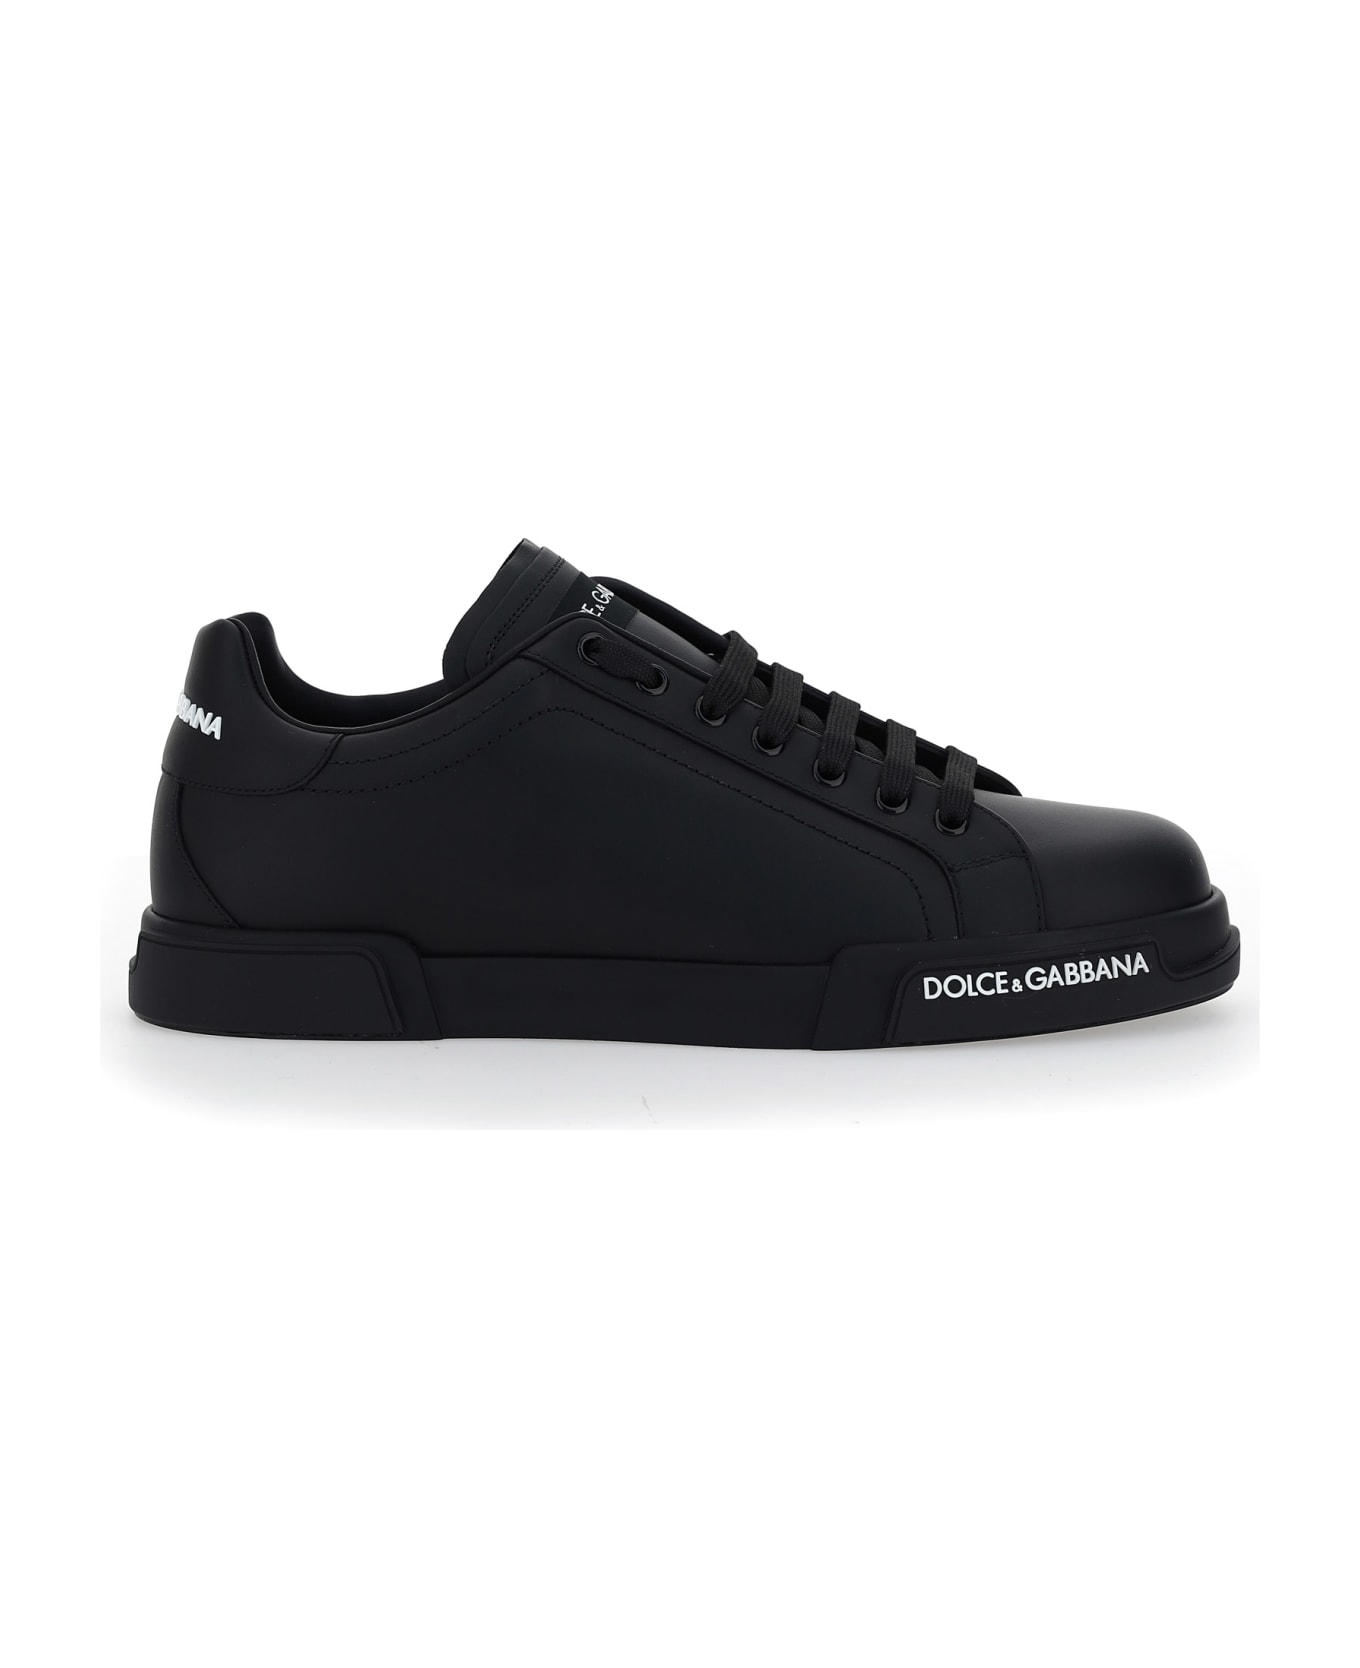 Dolce & Gabbana Portofino Black Leather Sneakers - Black スニーカー